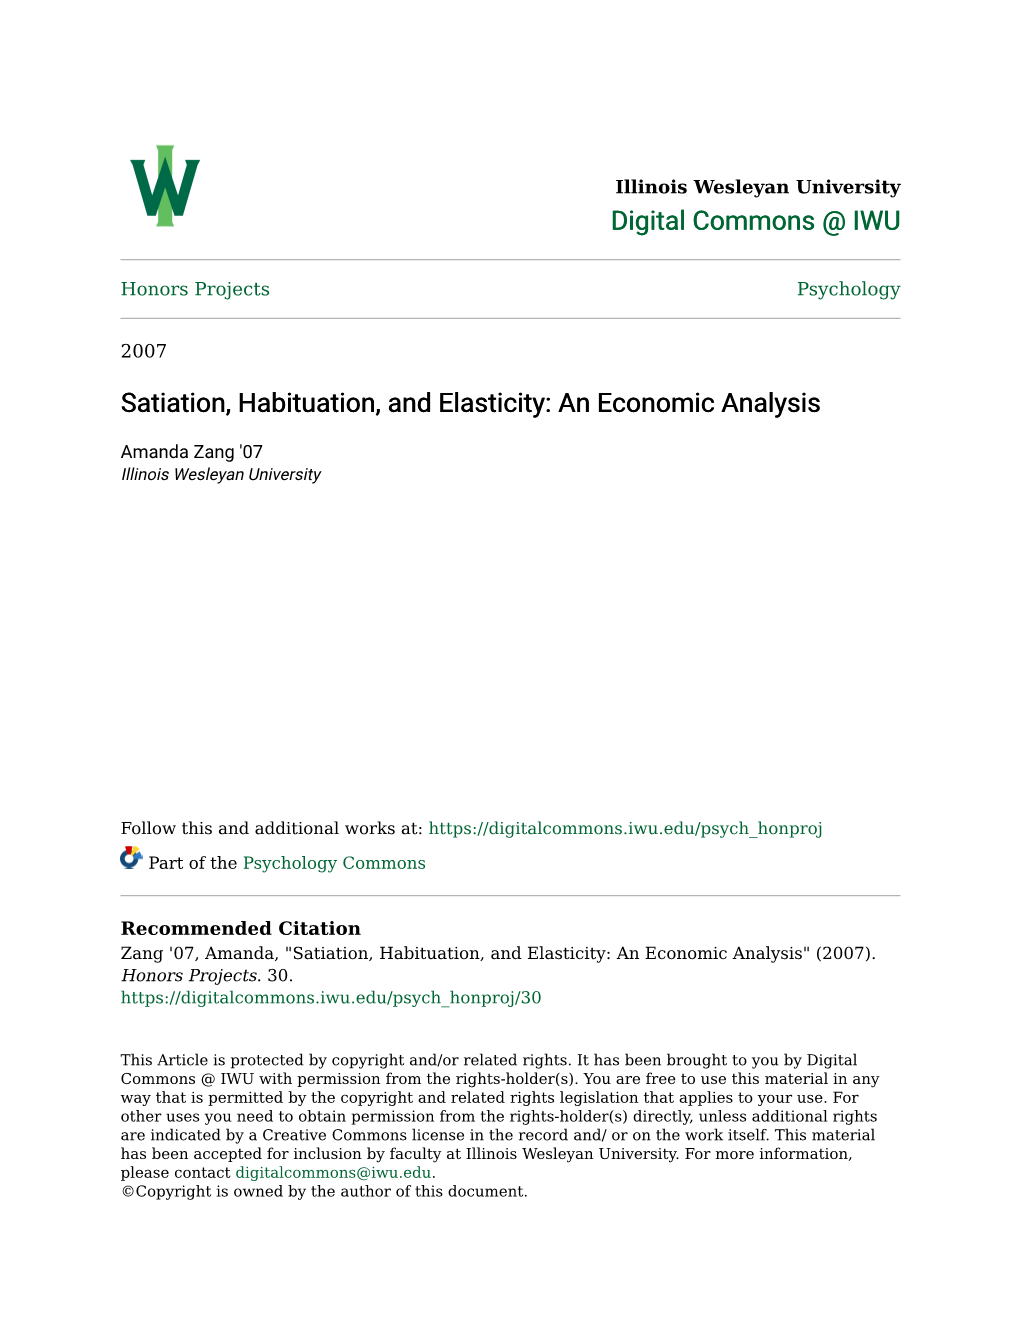 Satiation, Habituation, and Elasticity: an Economic Analysis